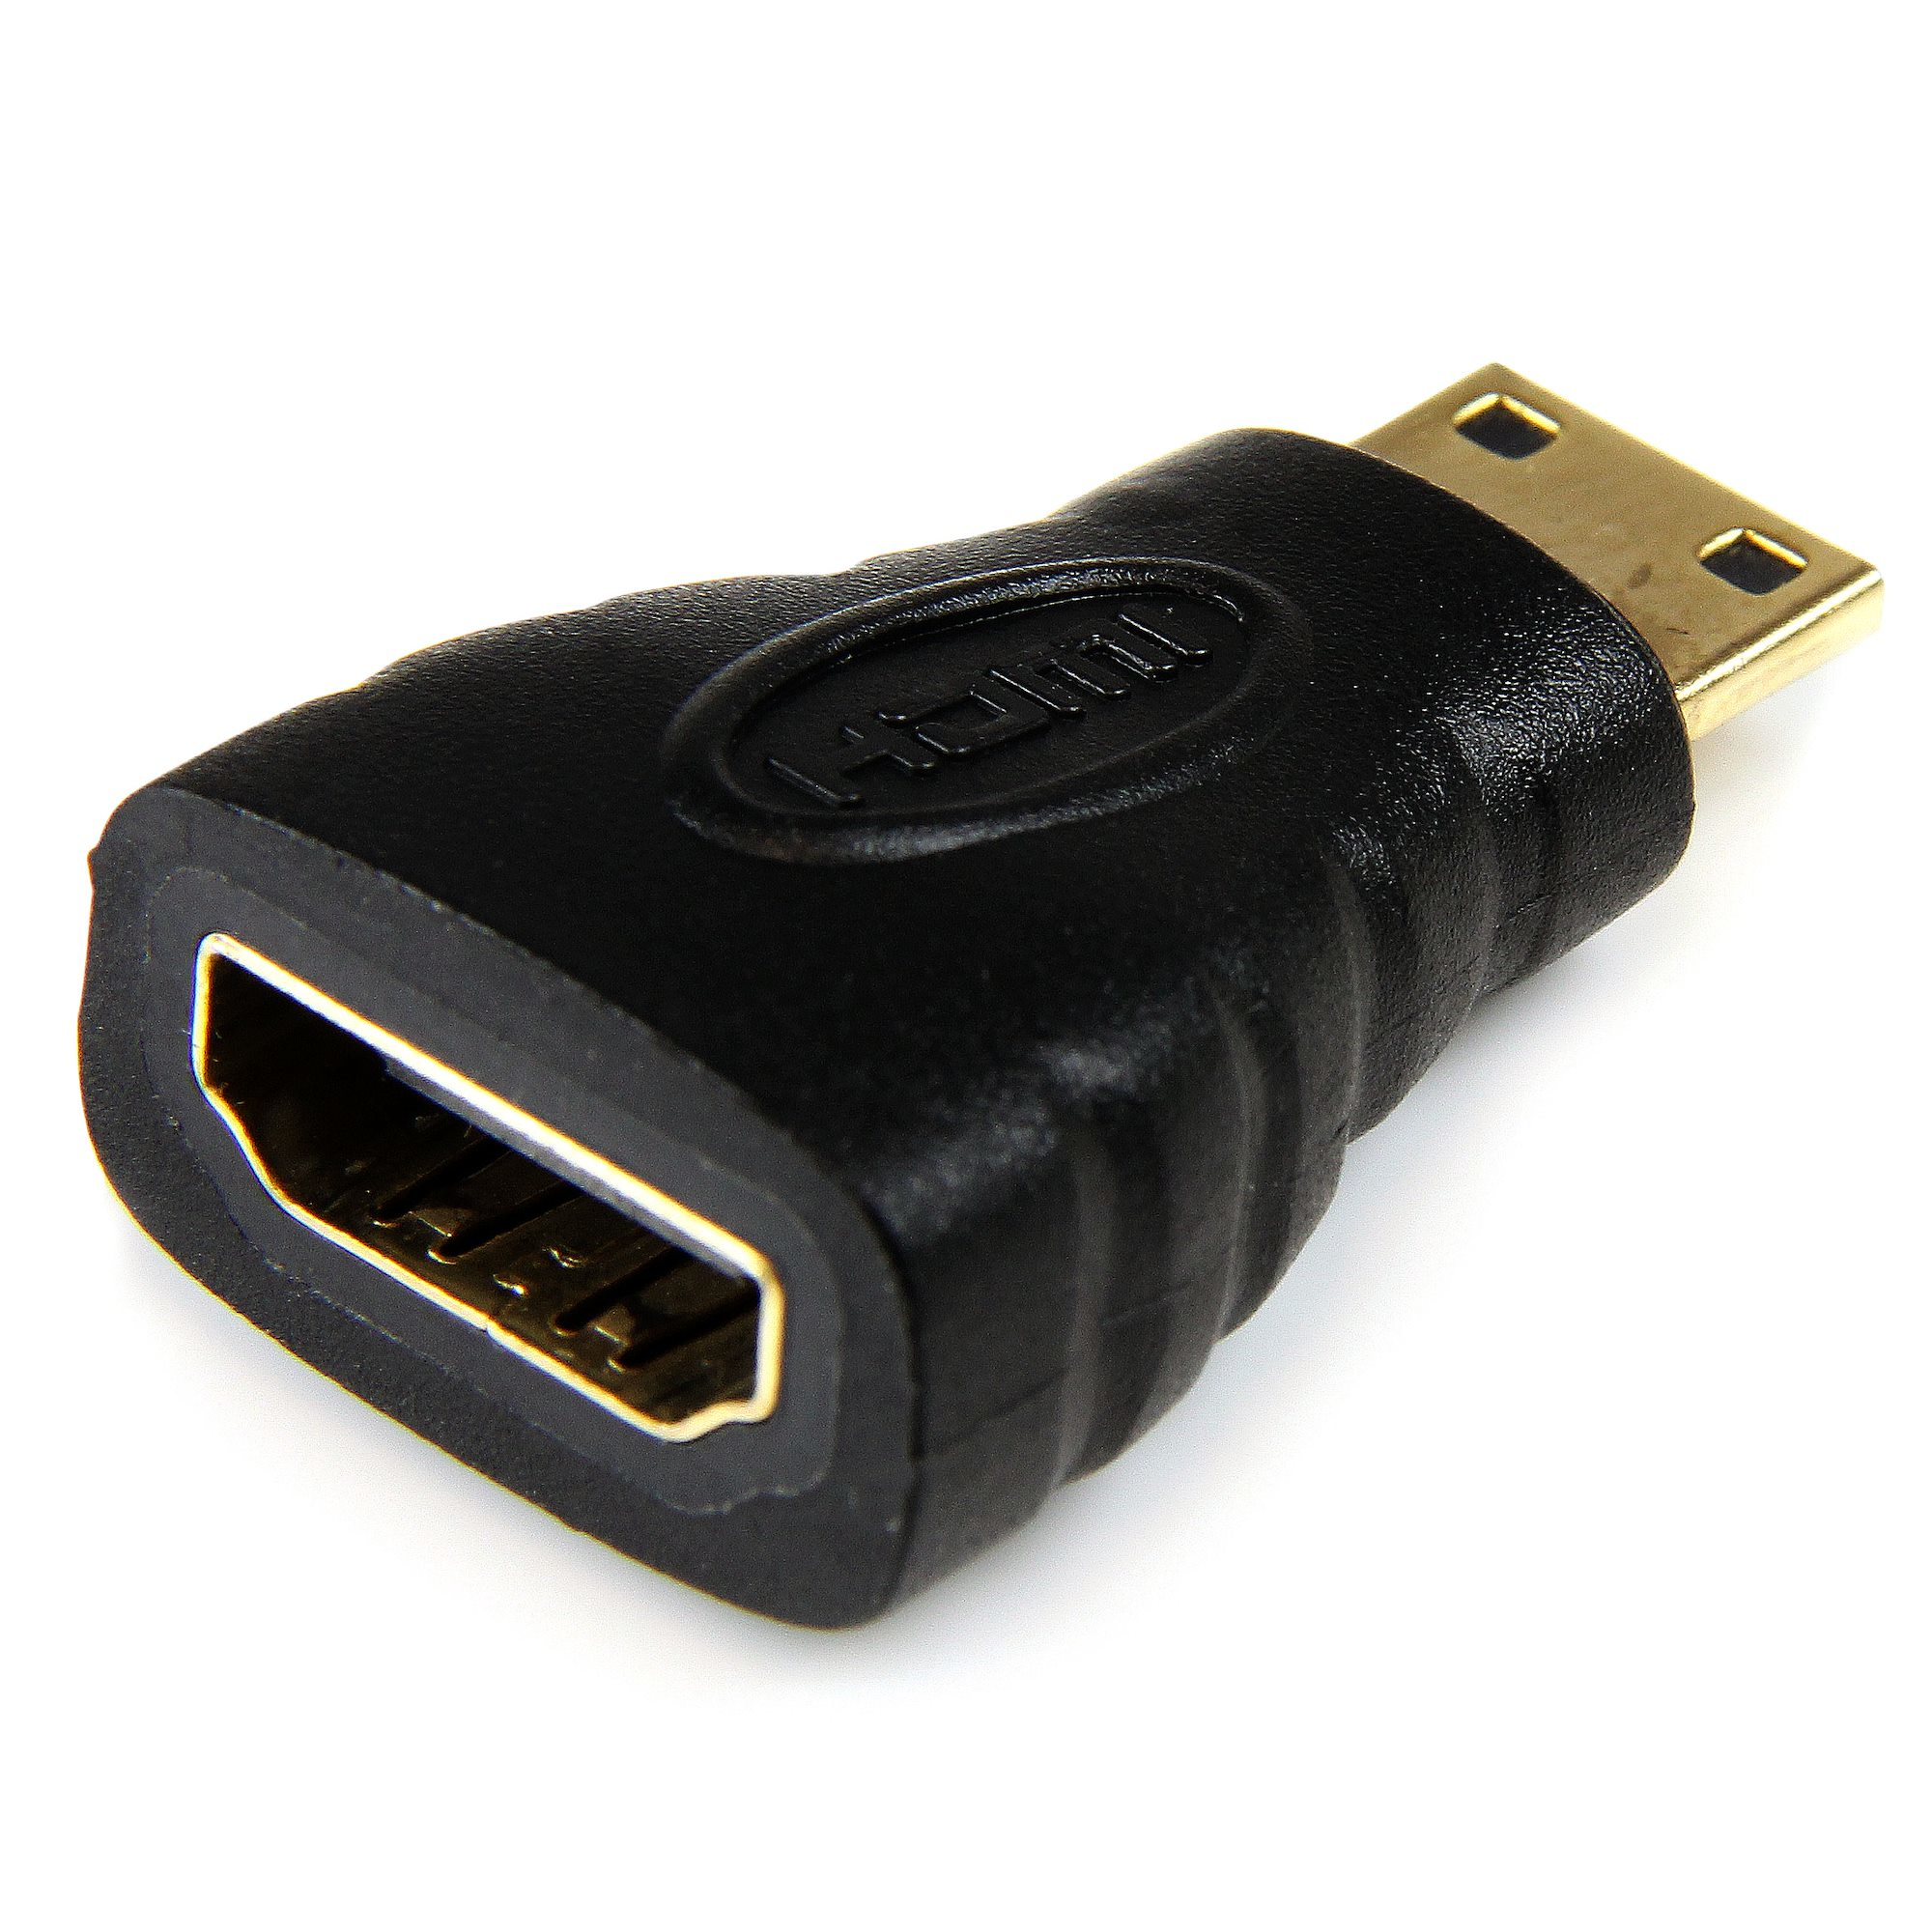 StarTech.com Mini HDMI to HDMI Adapter - 4K High Speed HDMI Adapter - 4K 30Hz Ultra HD High Speed HDMI Adapter - HDMI 1.4 - Gold Plated Connectors - UHD Mini HDMI Adapter 4K - Black